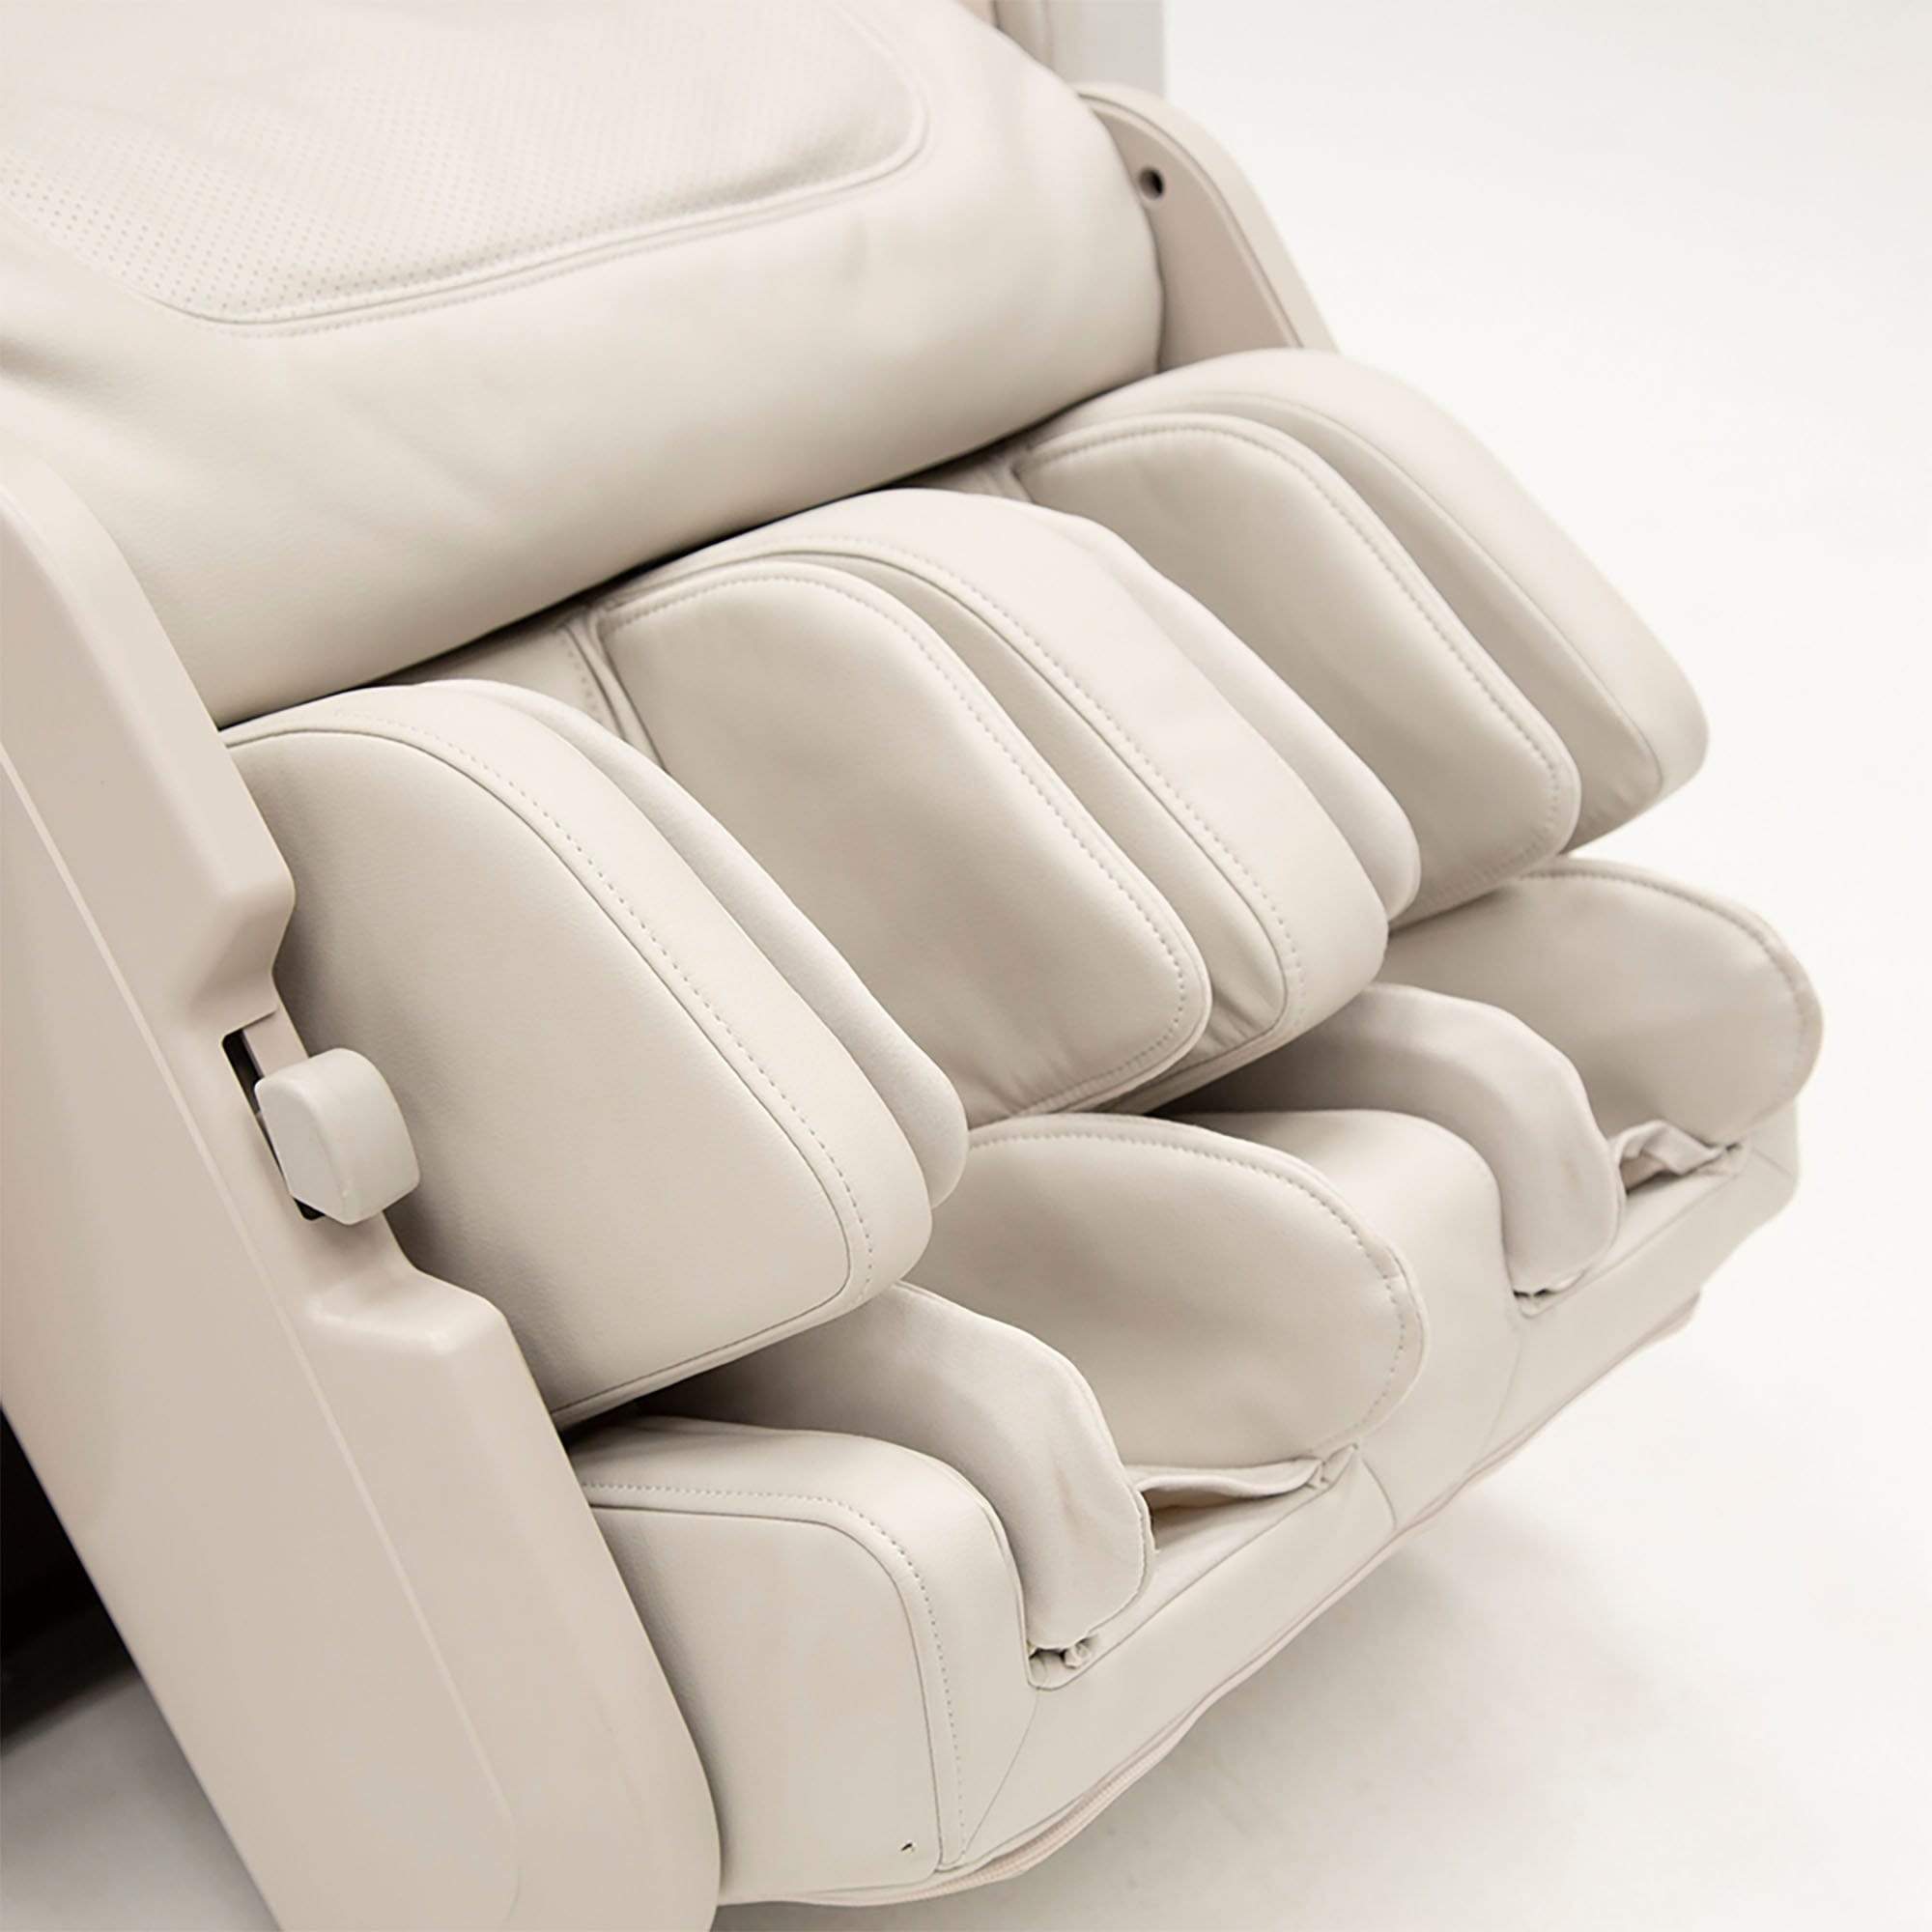 Synca Massage chair Synca Kagra 4D Premium Massage chair -White SMR0007-09NA